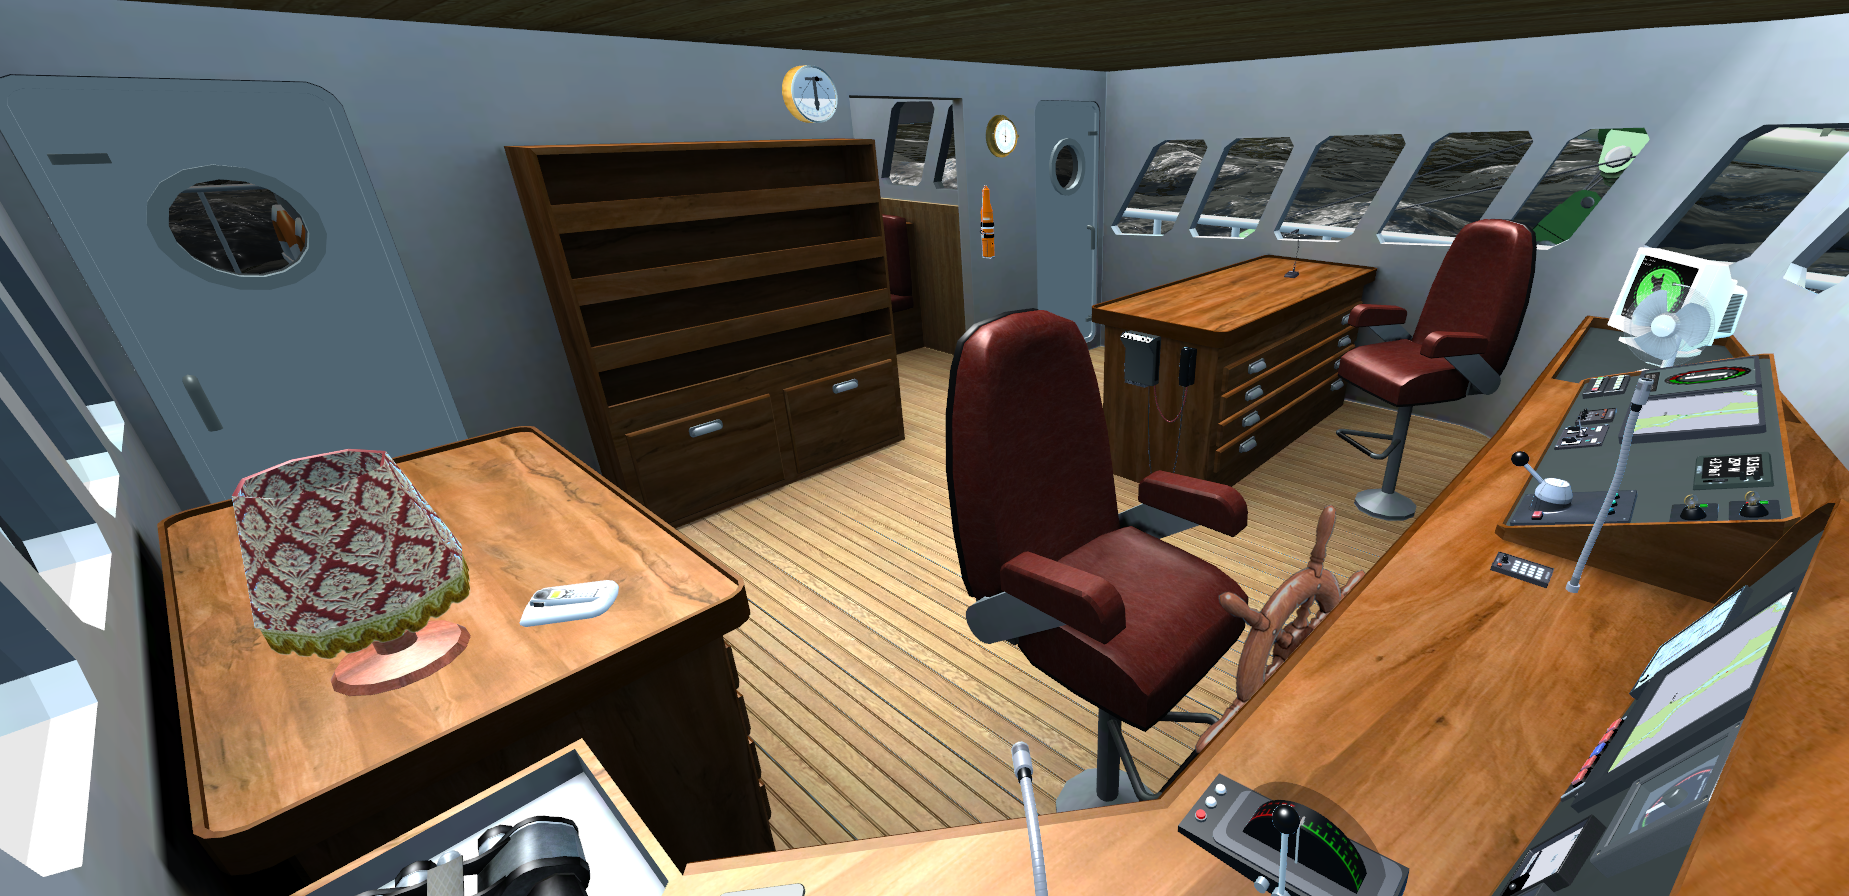 Ship Simulator extremes 2010. The ship игра. Реалистичный симулятор корабля. Симулятор офиса.